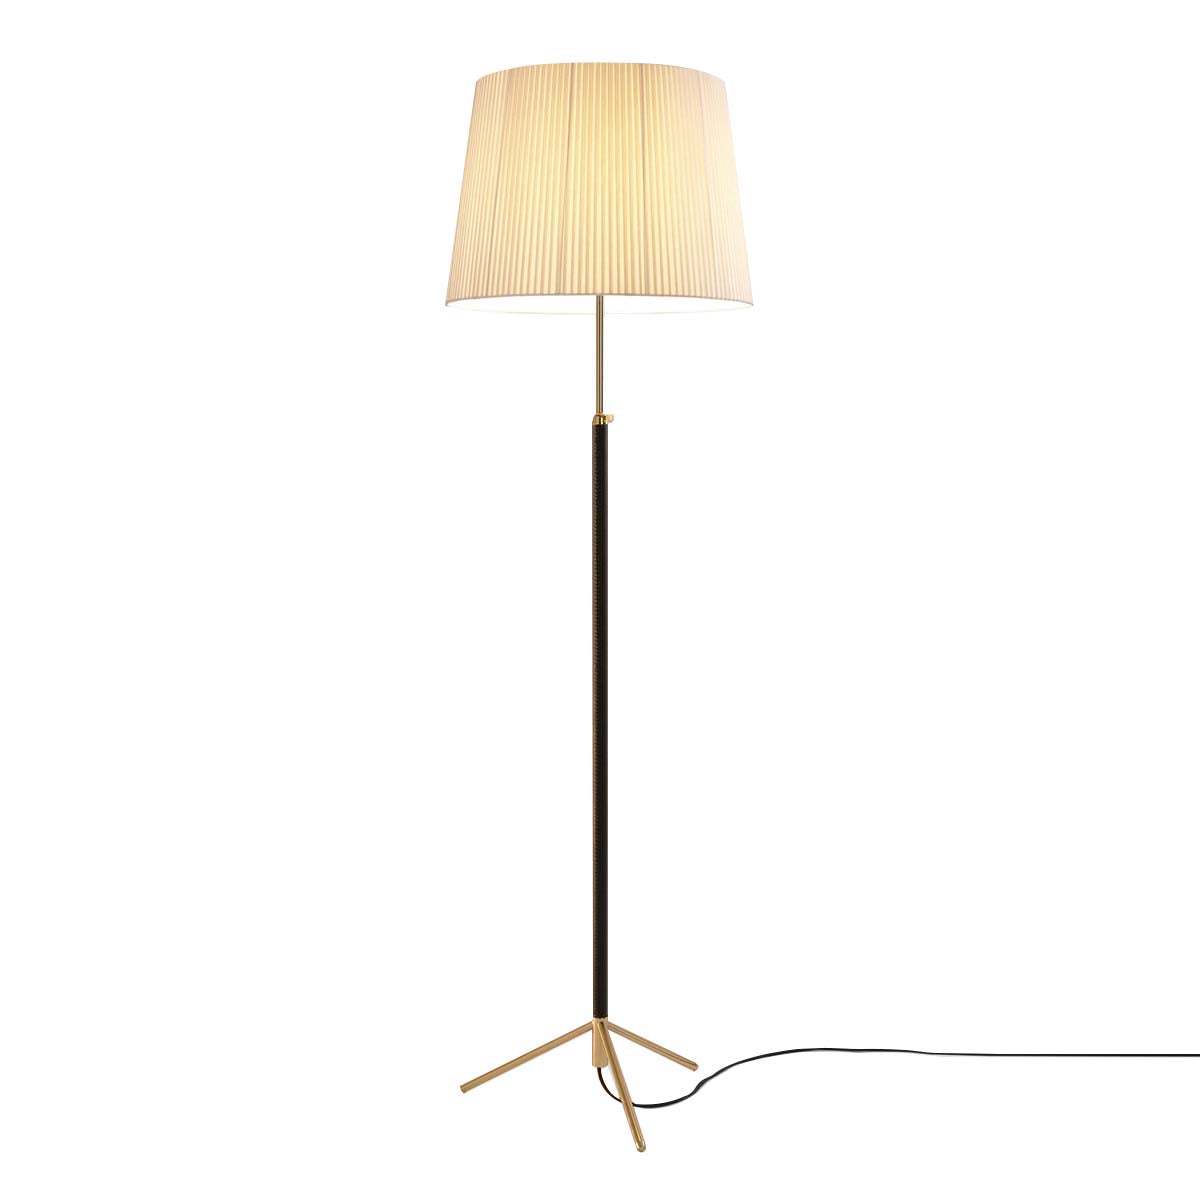 Pie de Salón Floor Lamp: G1 + Polished Brass + Natural